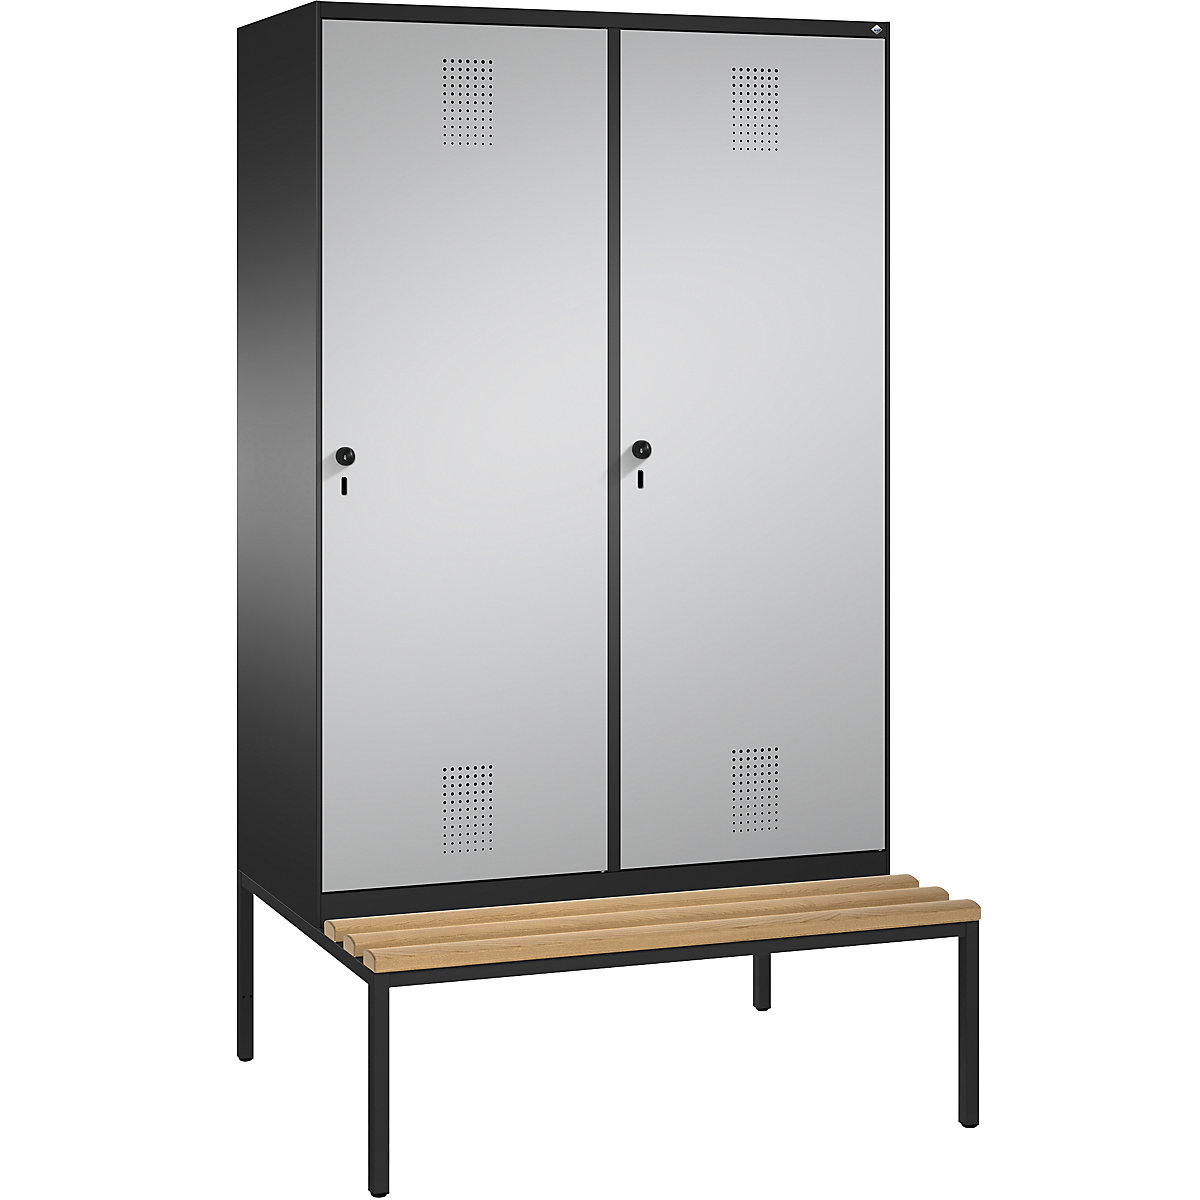 EVOLO cloakroom locker, with bench, door for 2 compartments – C+P, 4 compartments, 2 doors, compartment width 300 mm, black grey / white aluminium-7